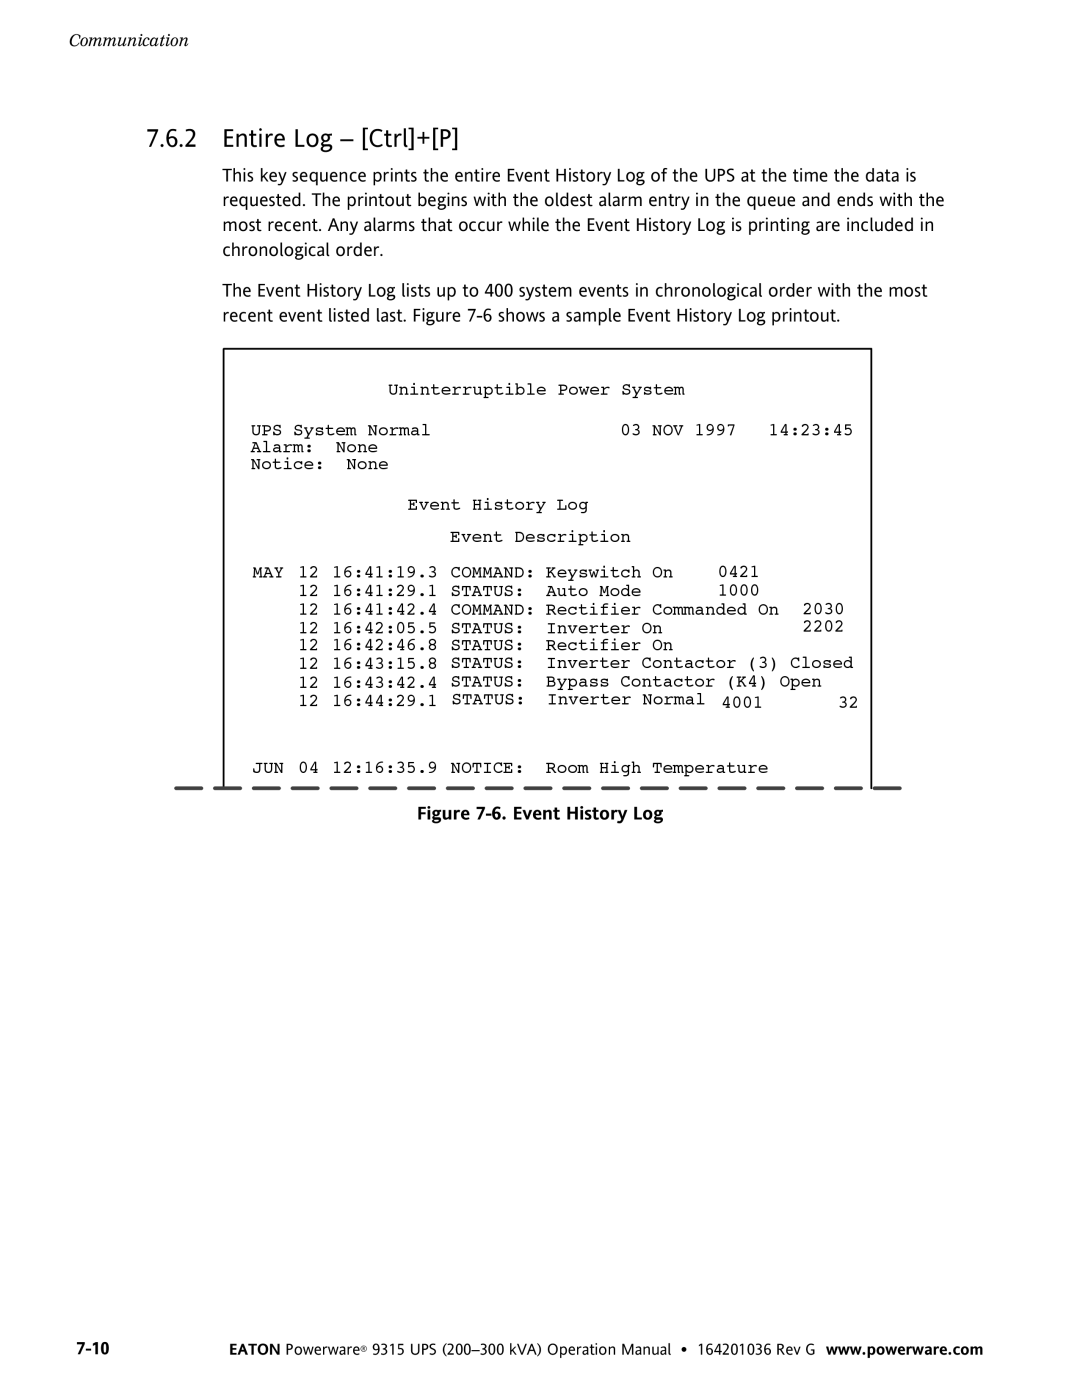 Powerware 9315 UPS operation manual Entire Log Ctrl+P, Event History Log 